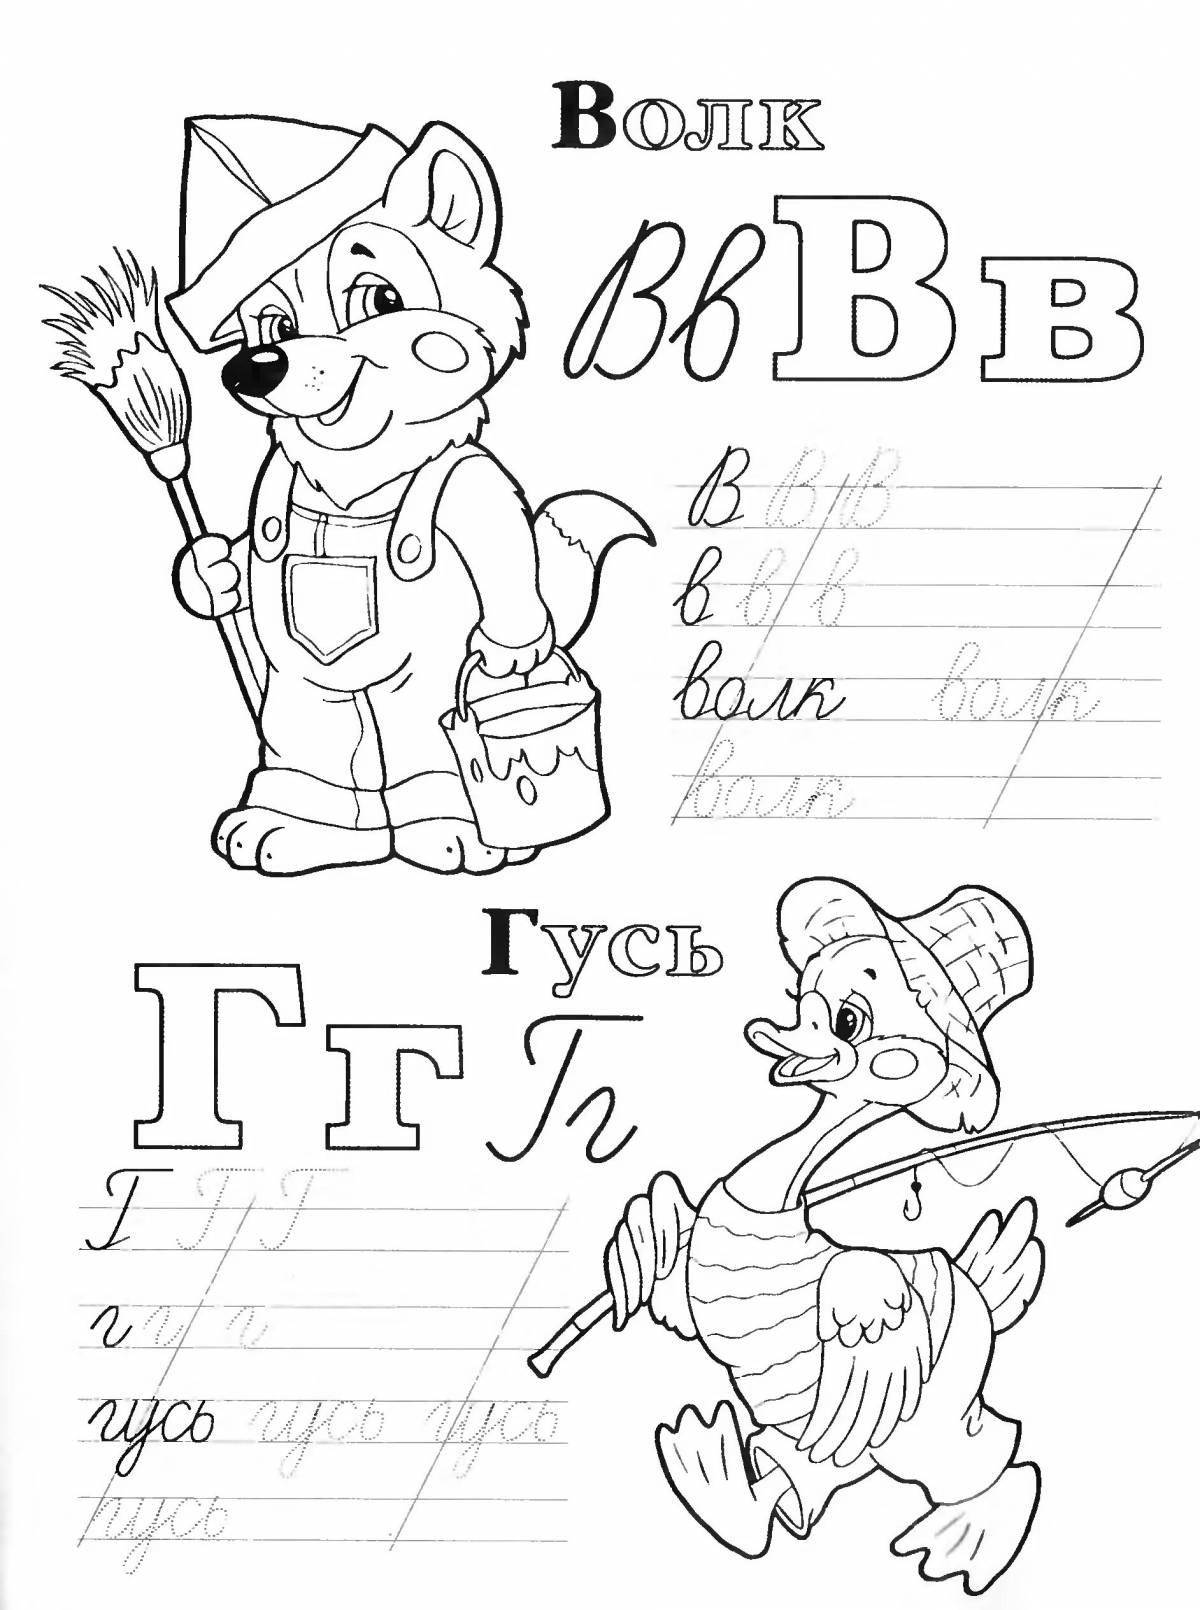 Alphabetic coloring book